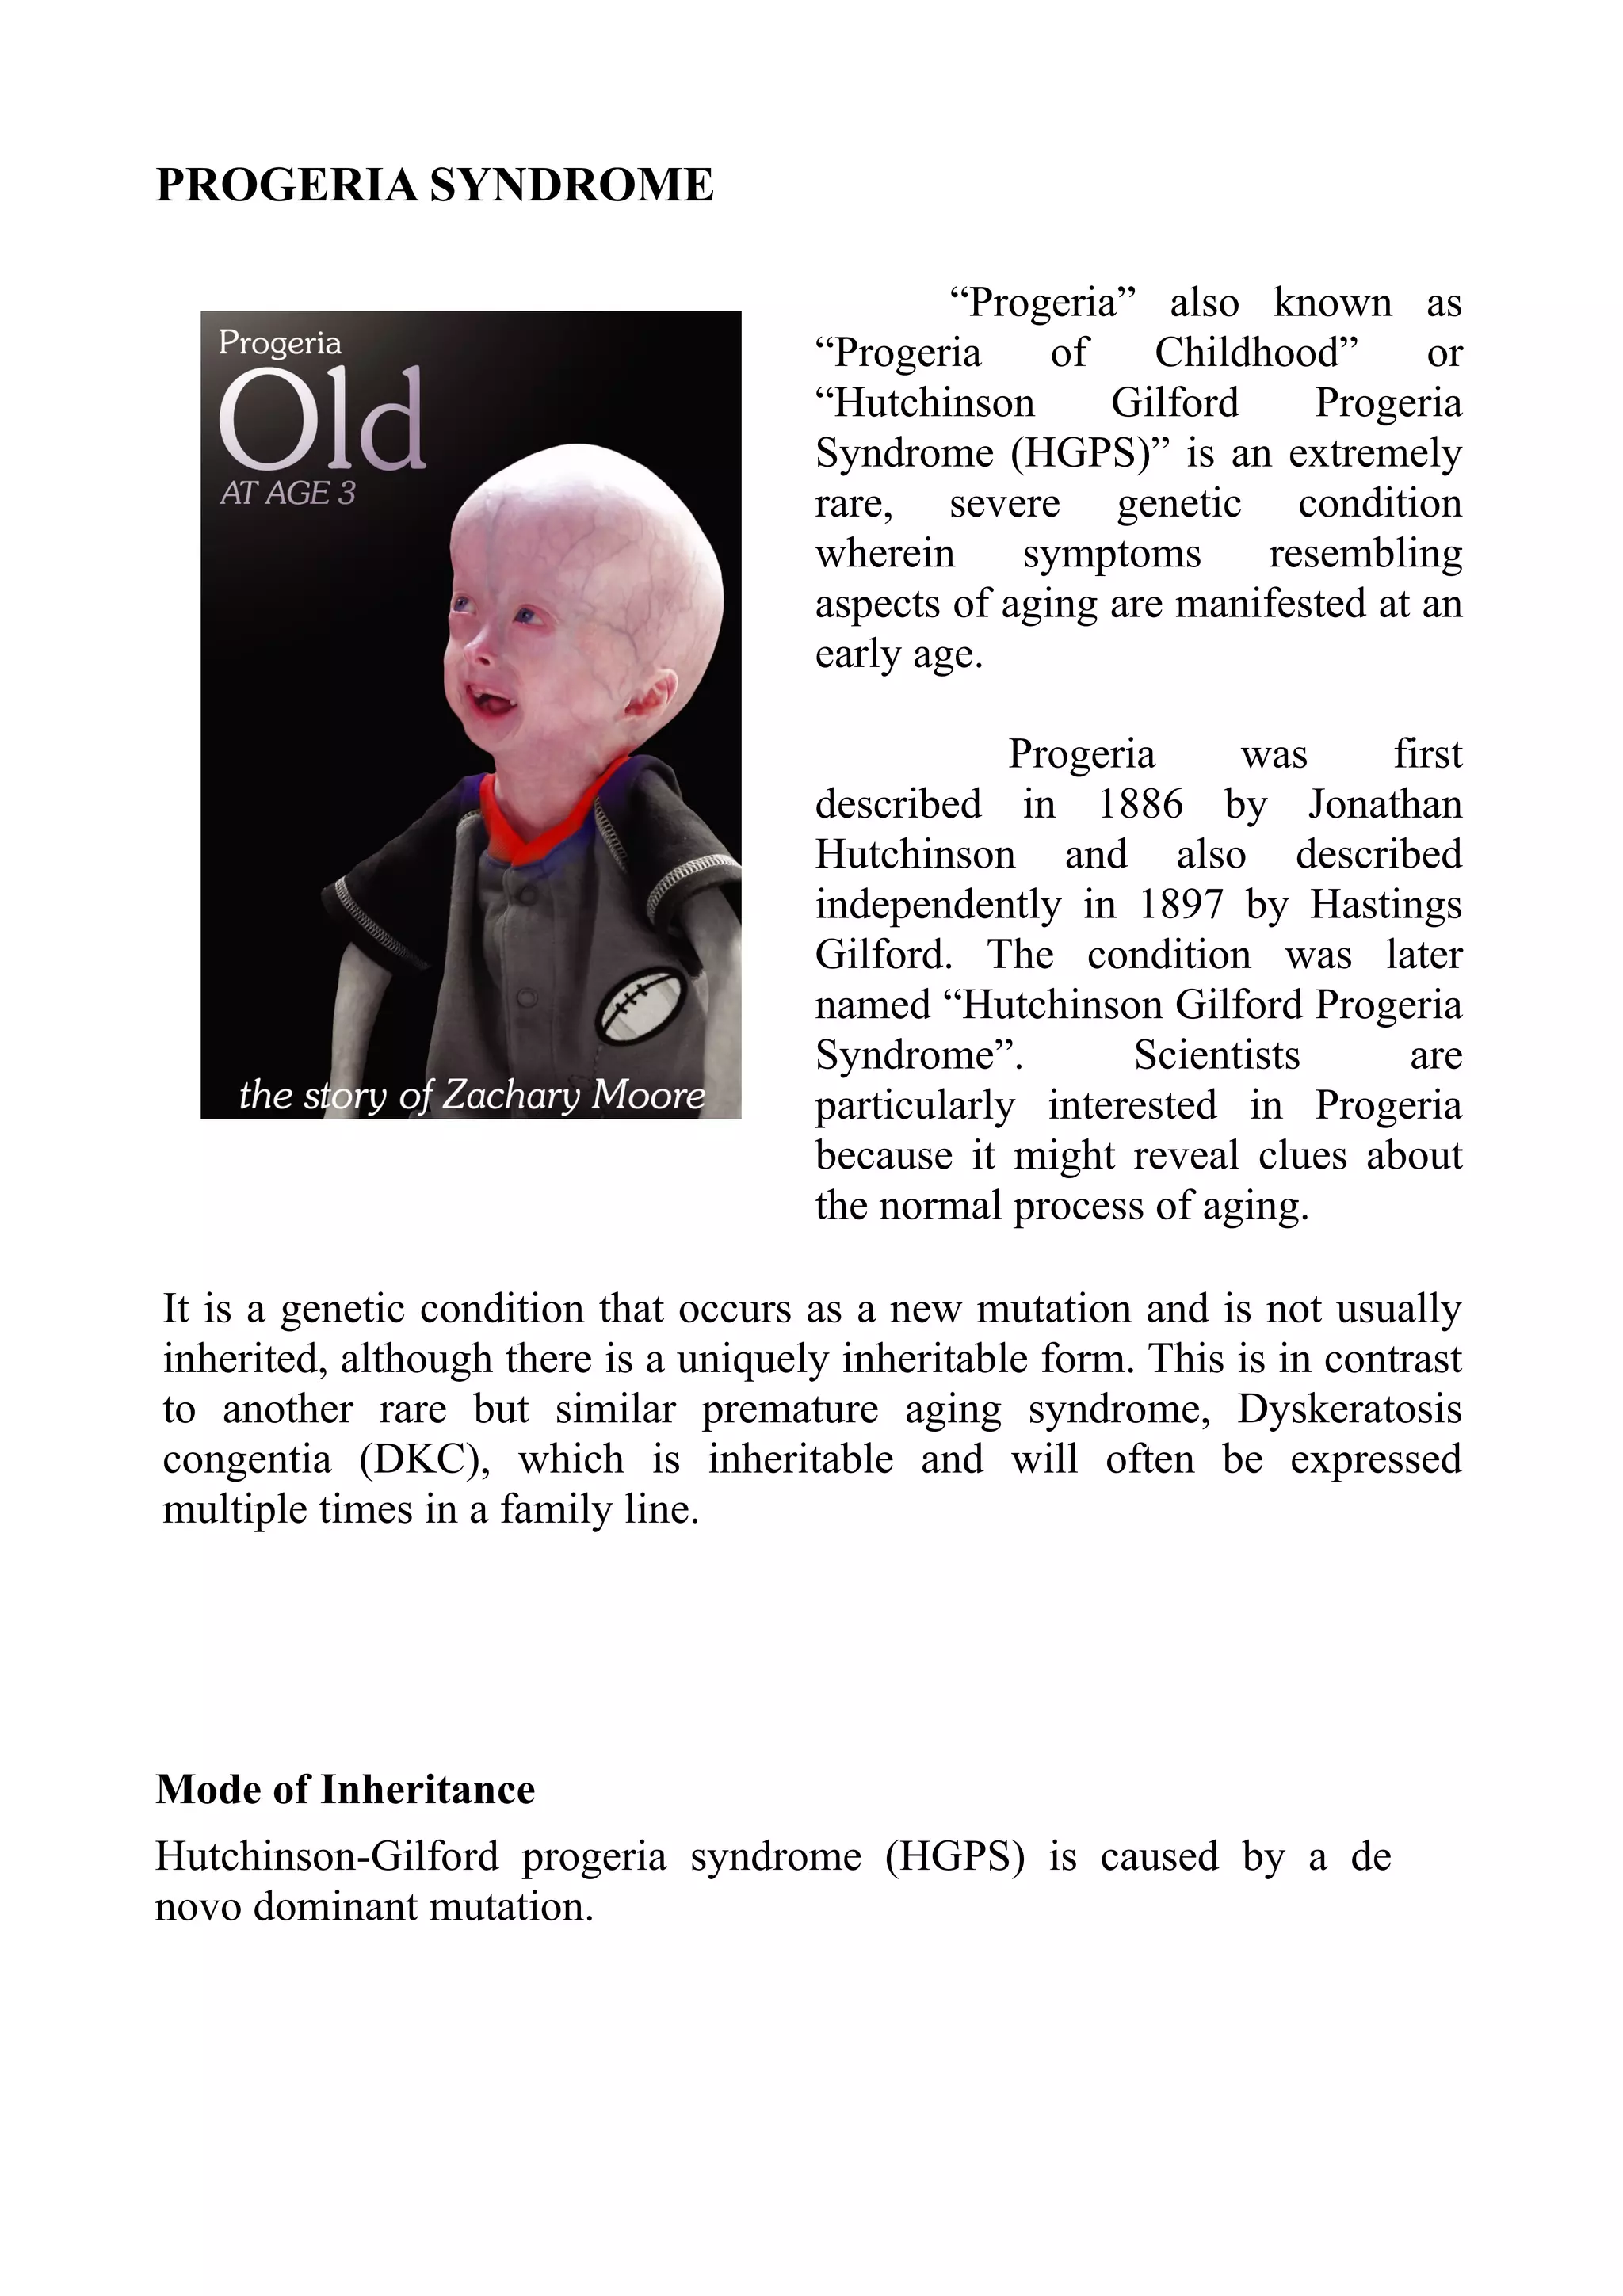 progeria mode of inheritance